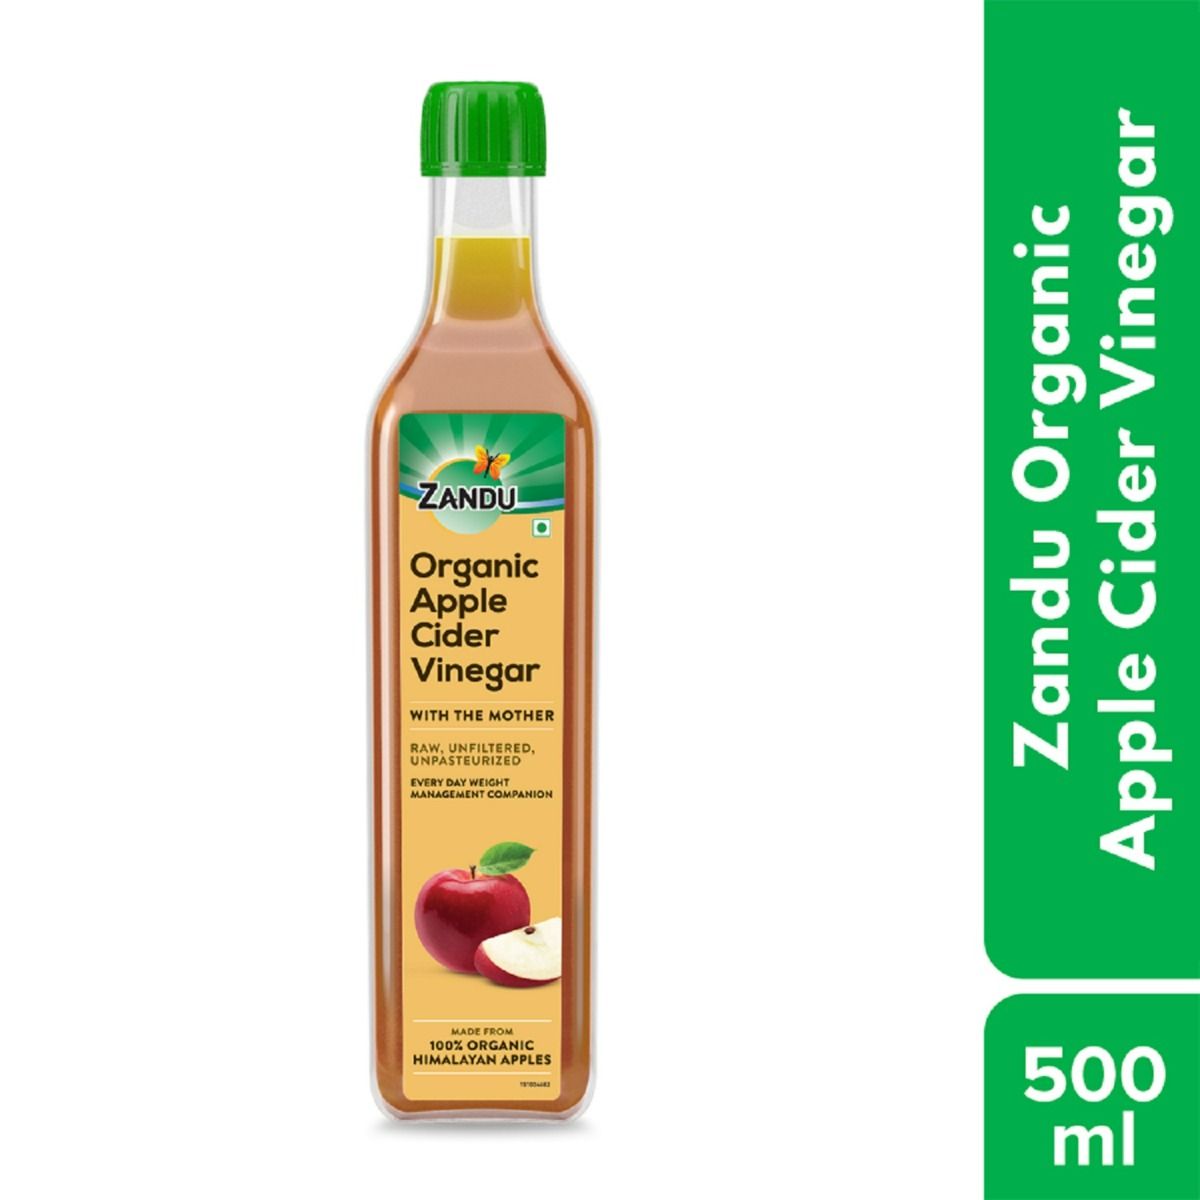 Buy Zandu Organic Apple Cider Vinegar, 500 ml Online